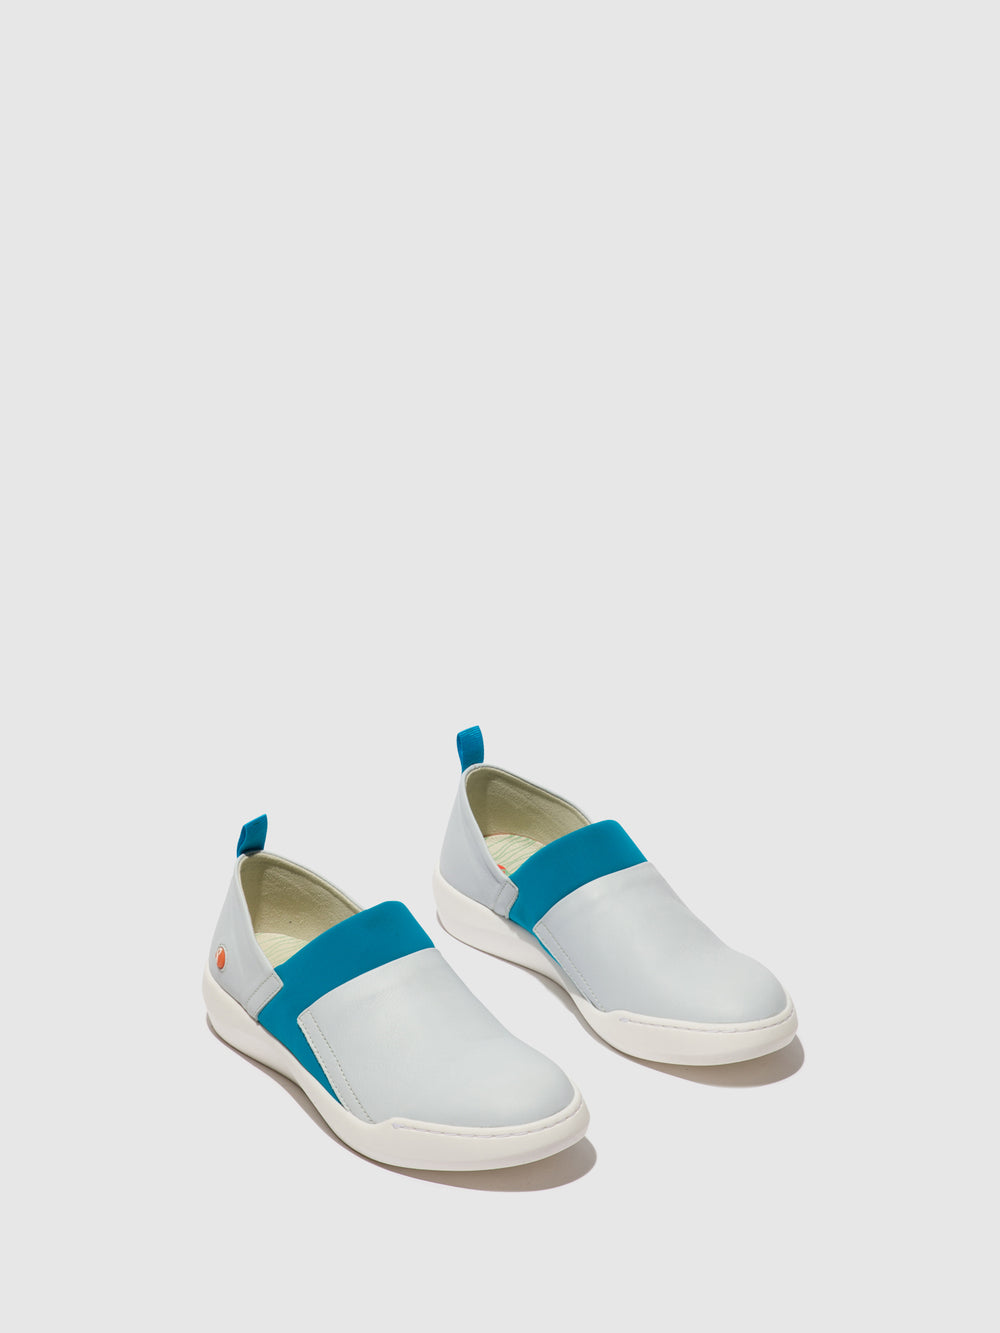 Slip-on Shoes BAJU709 LIGHT BLUE/TURQUOISE